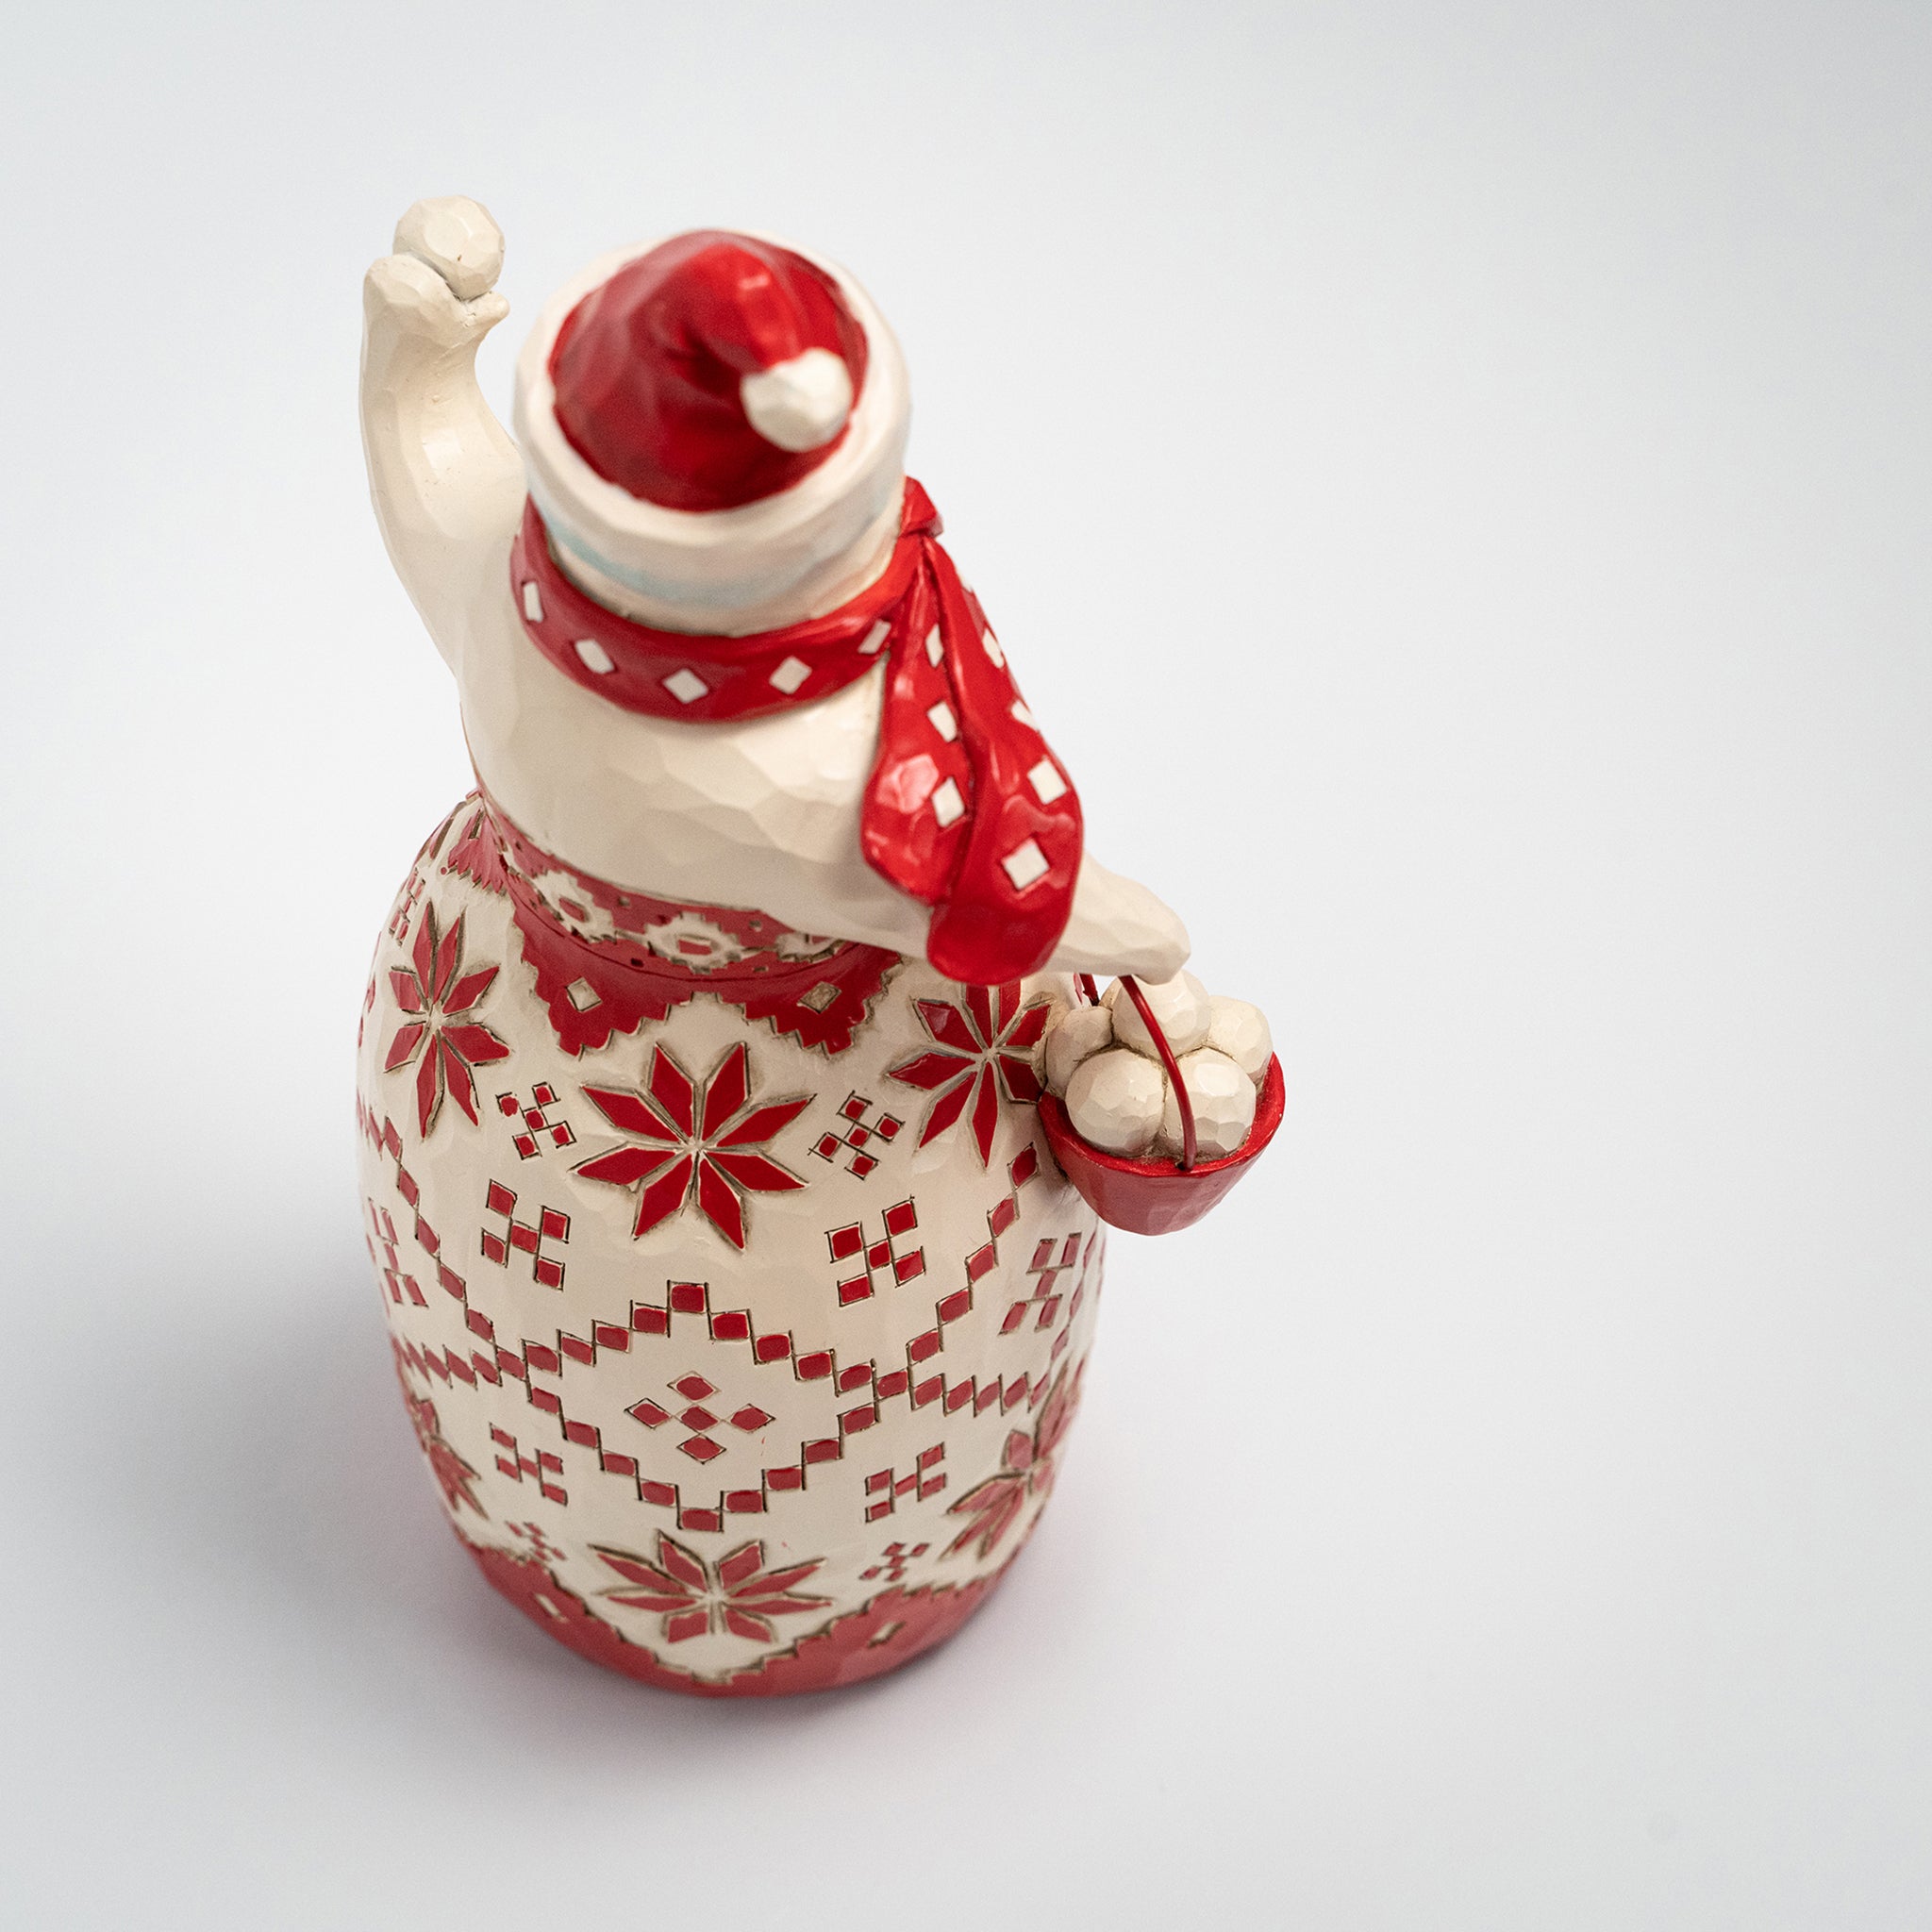 Nordic Noel Snowman Figure by Jim Shore